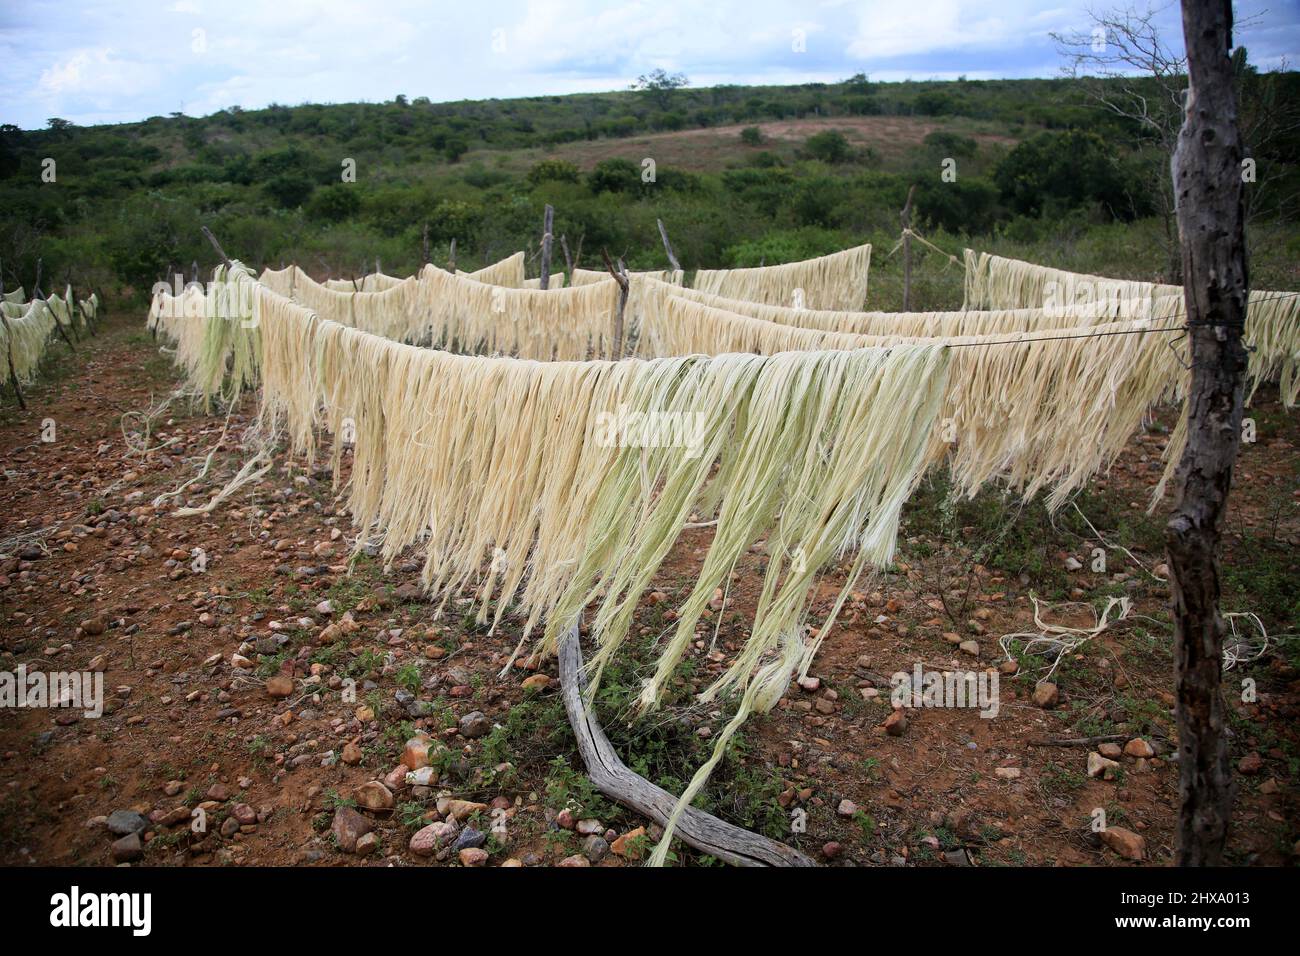 araci, bahia, brazil - march 9, 2022: drying fibers of sisal plant - agavaceae - for rope production in the city of Araci, semi-arid region of Bahia. Stock Photo